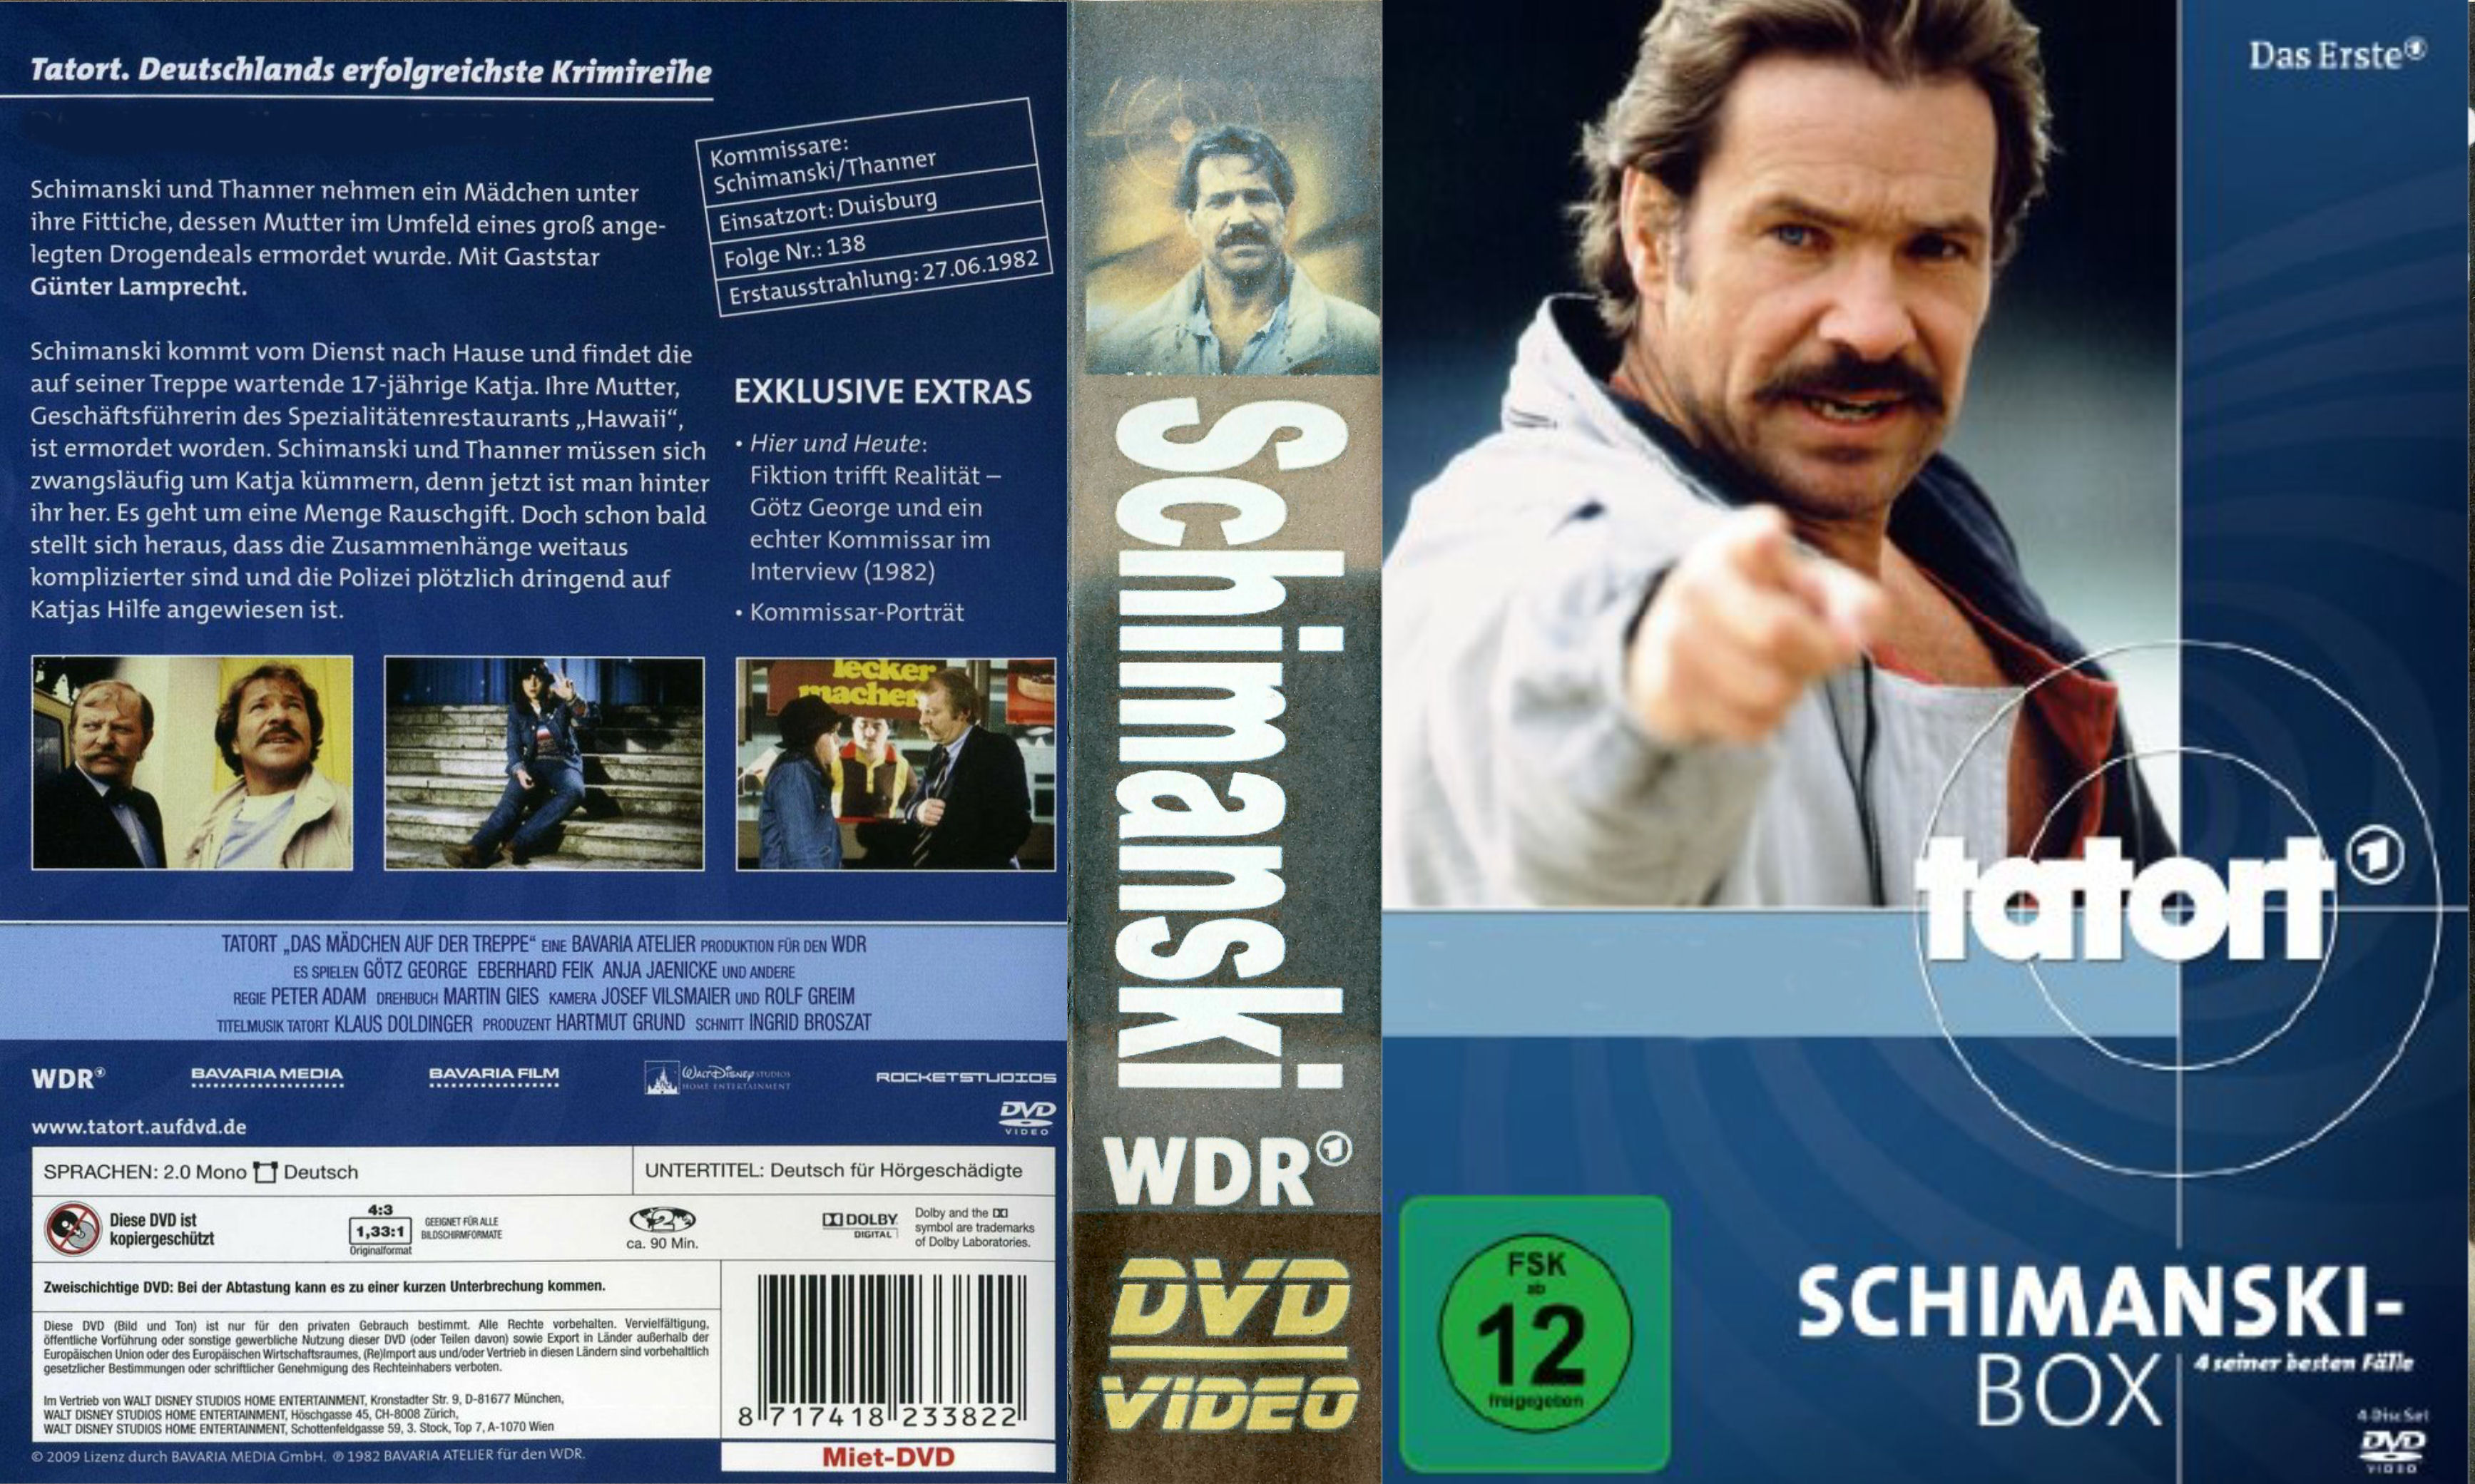 Schimanski Collectie Tatort No Subs - DvD 22